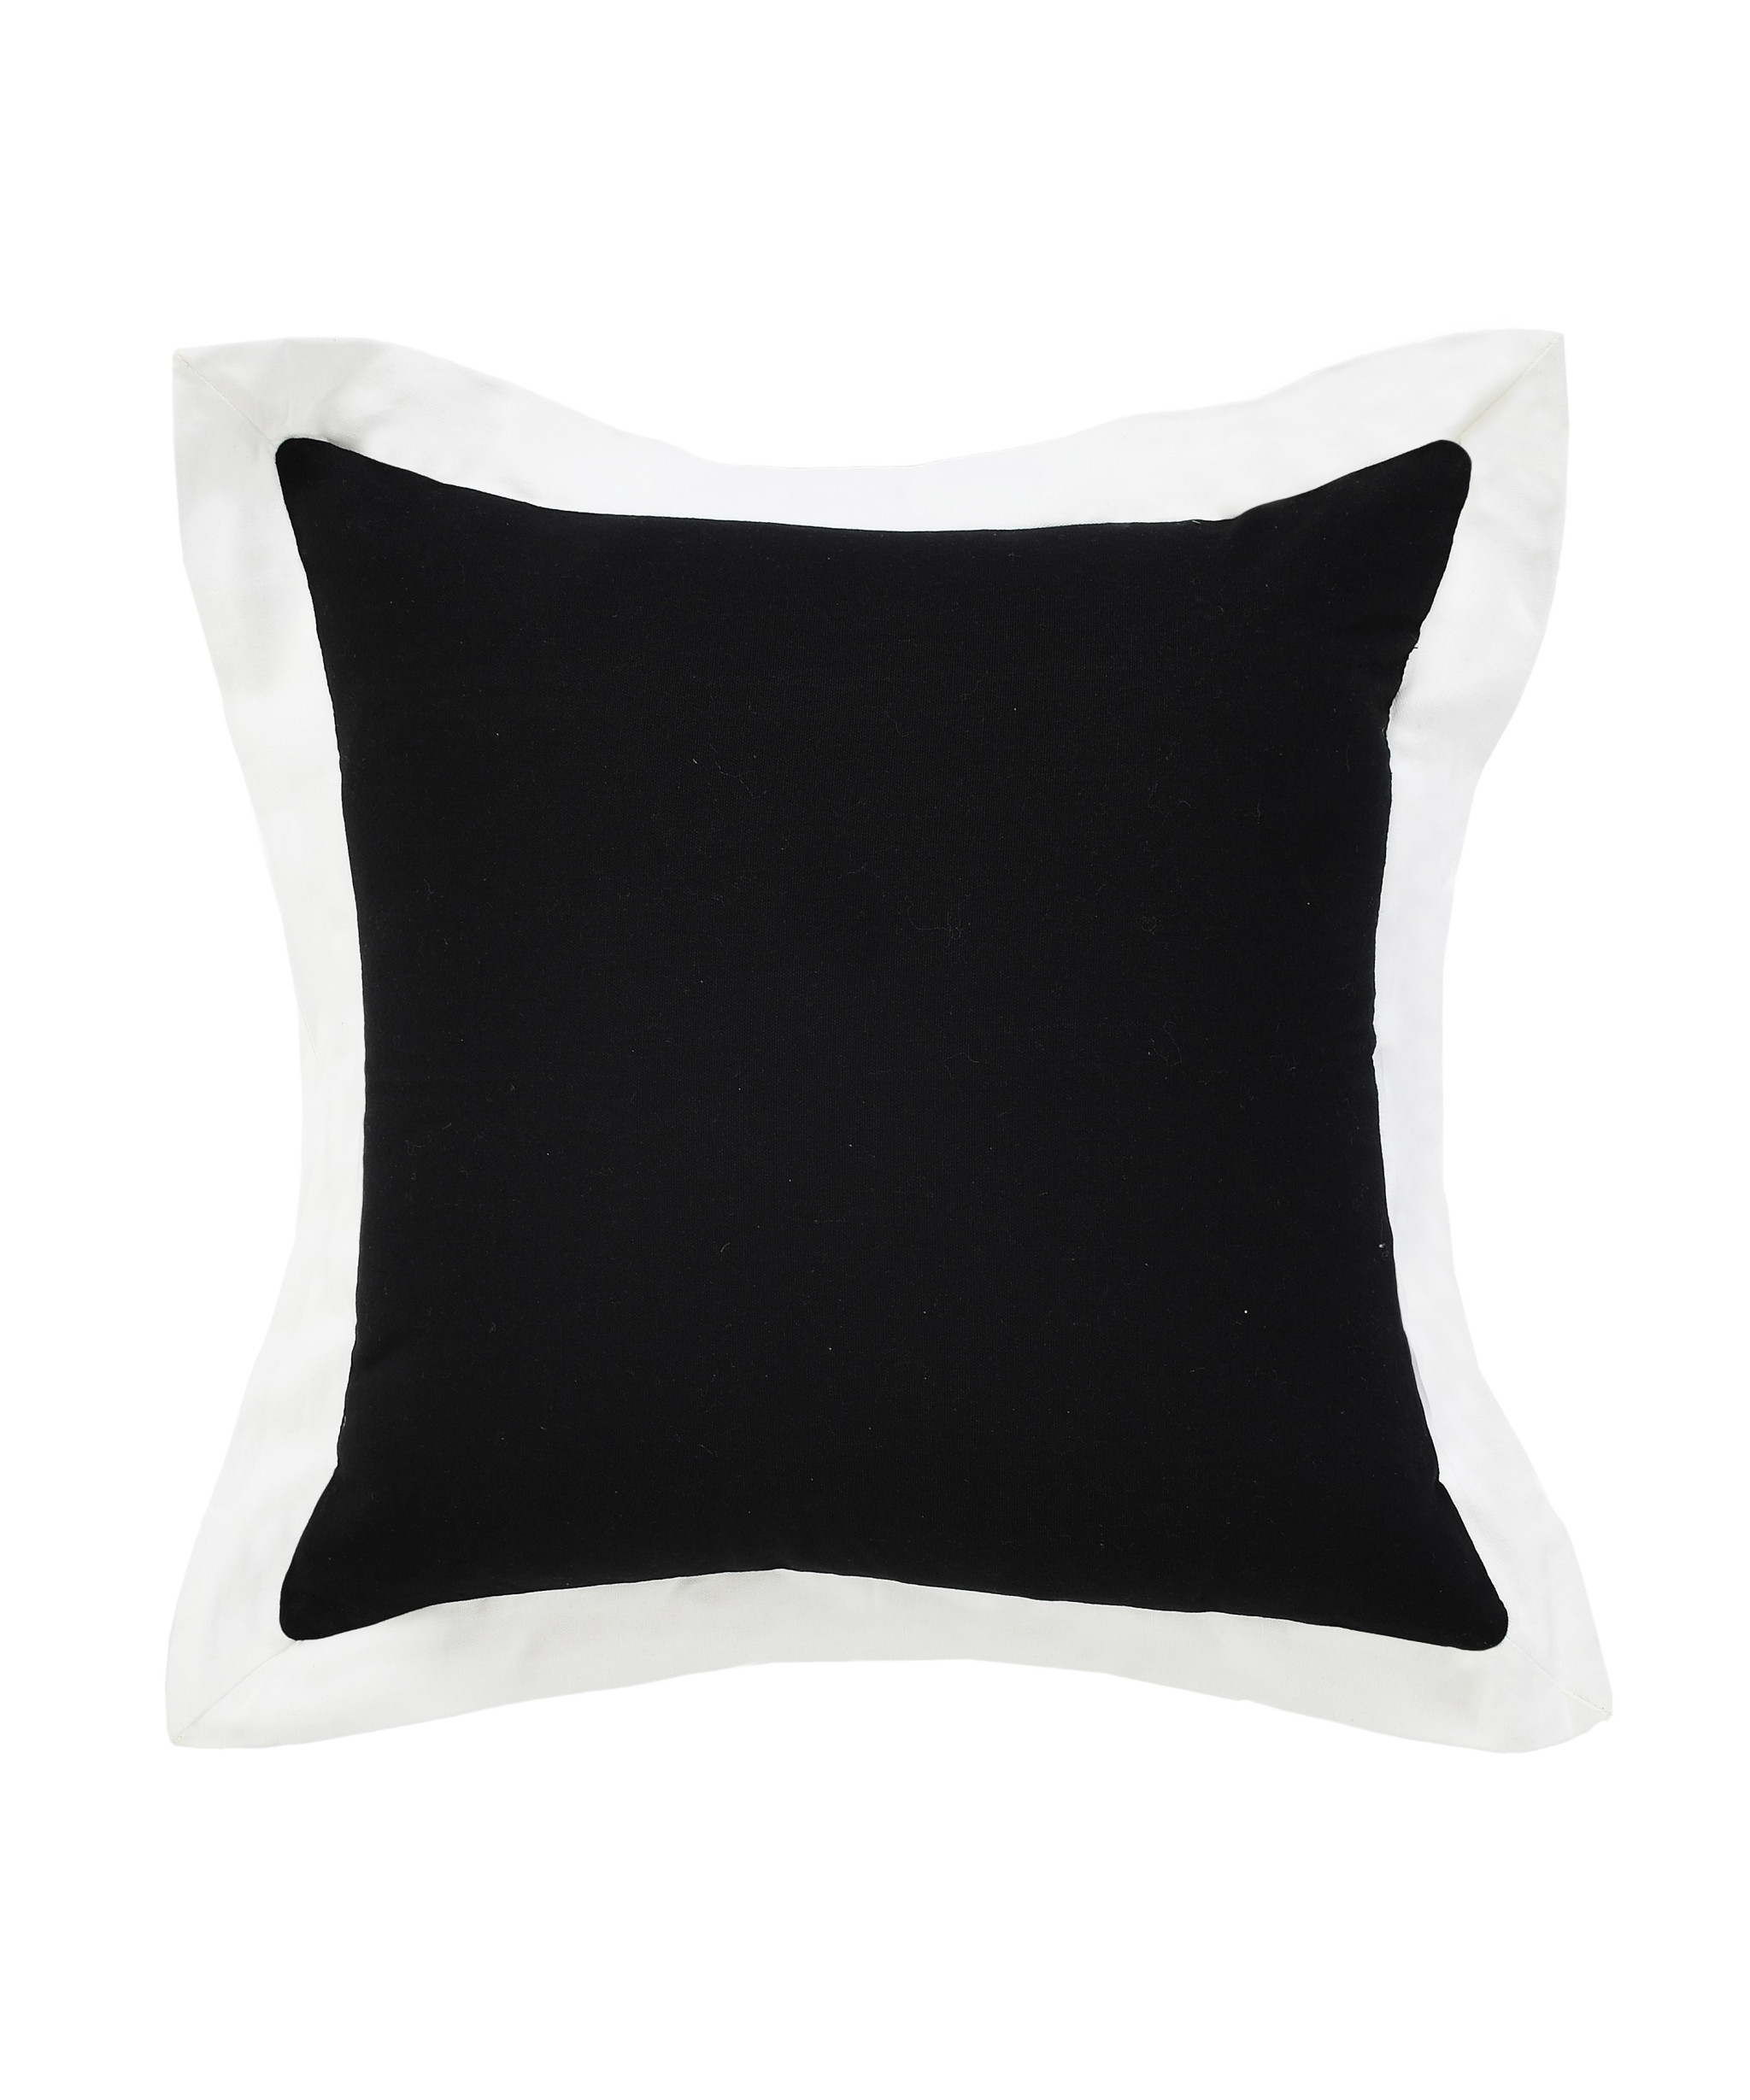 20" X 20" Black And White 100% Cotton Geometric Zippered Pillow-516829-1